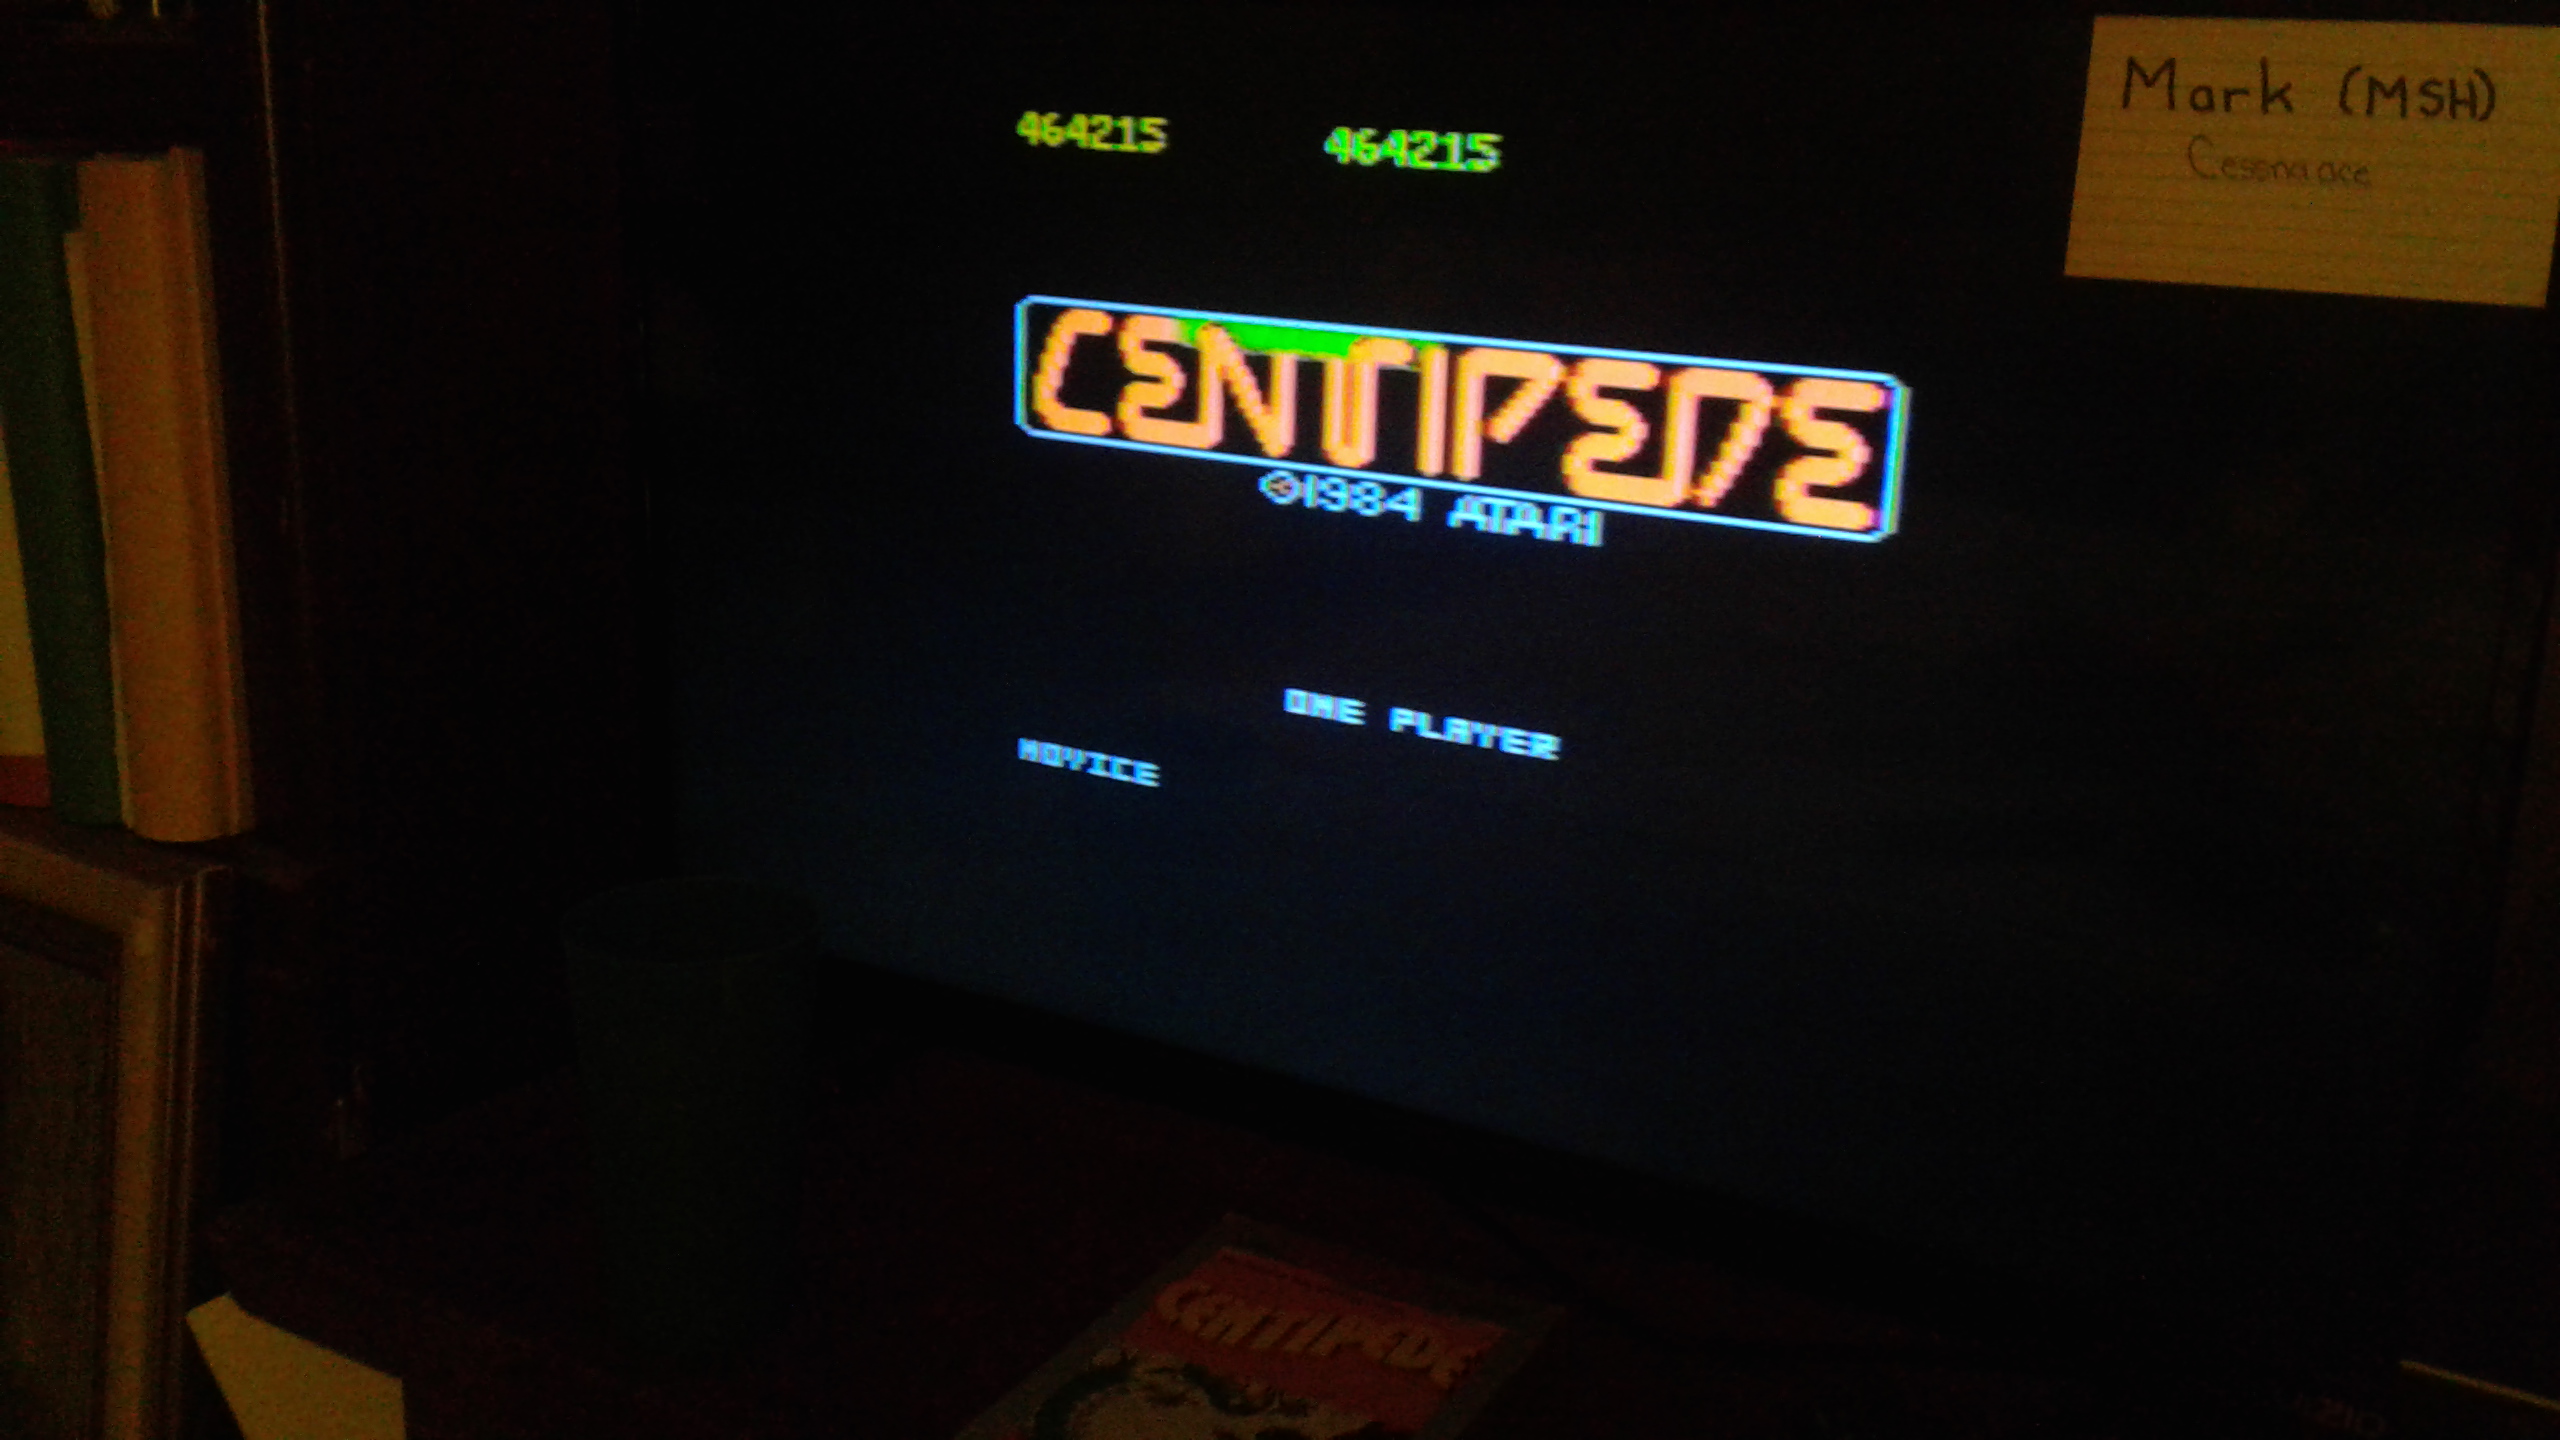 Mark: Centipede: Novice (Atari 7800) 464,215 points on 2019-05-14 23:47:54